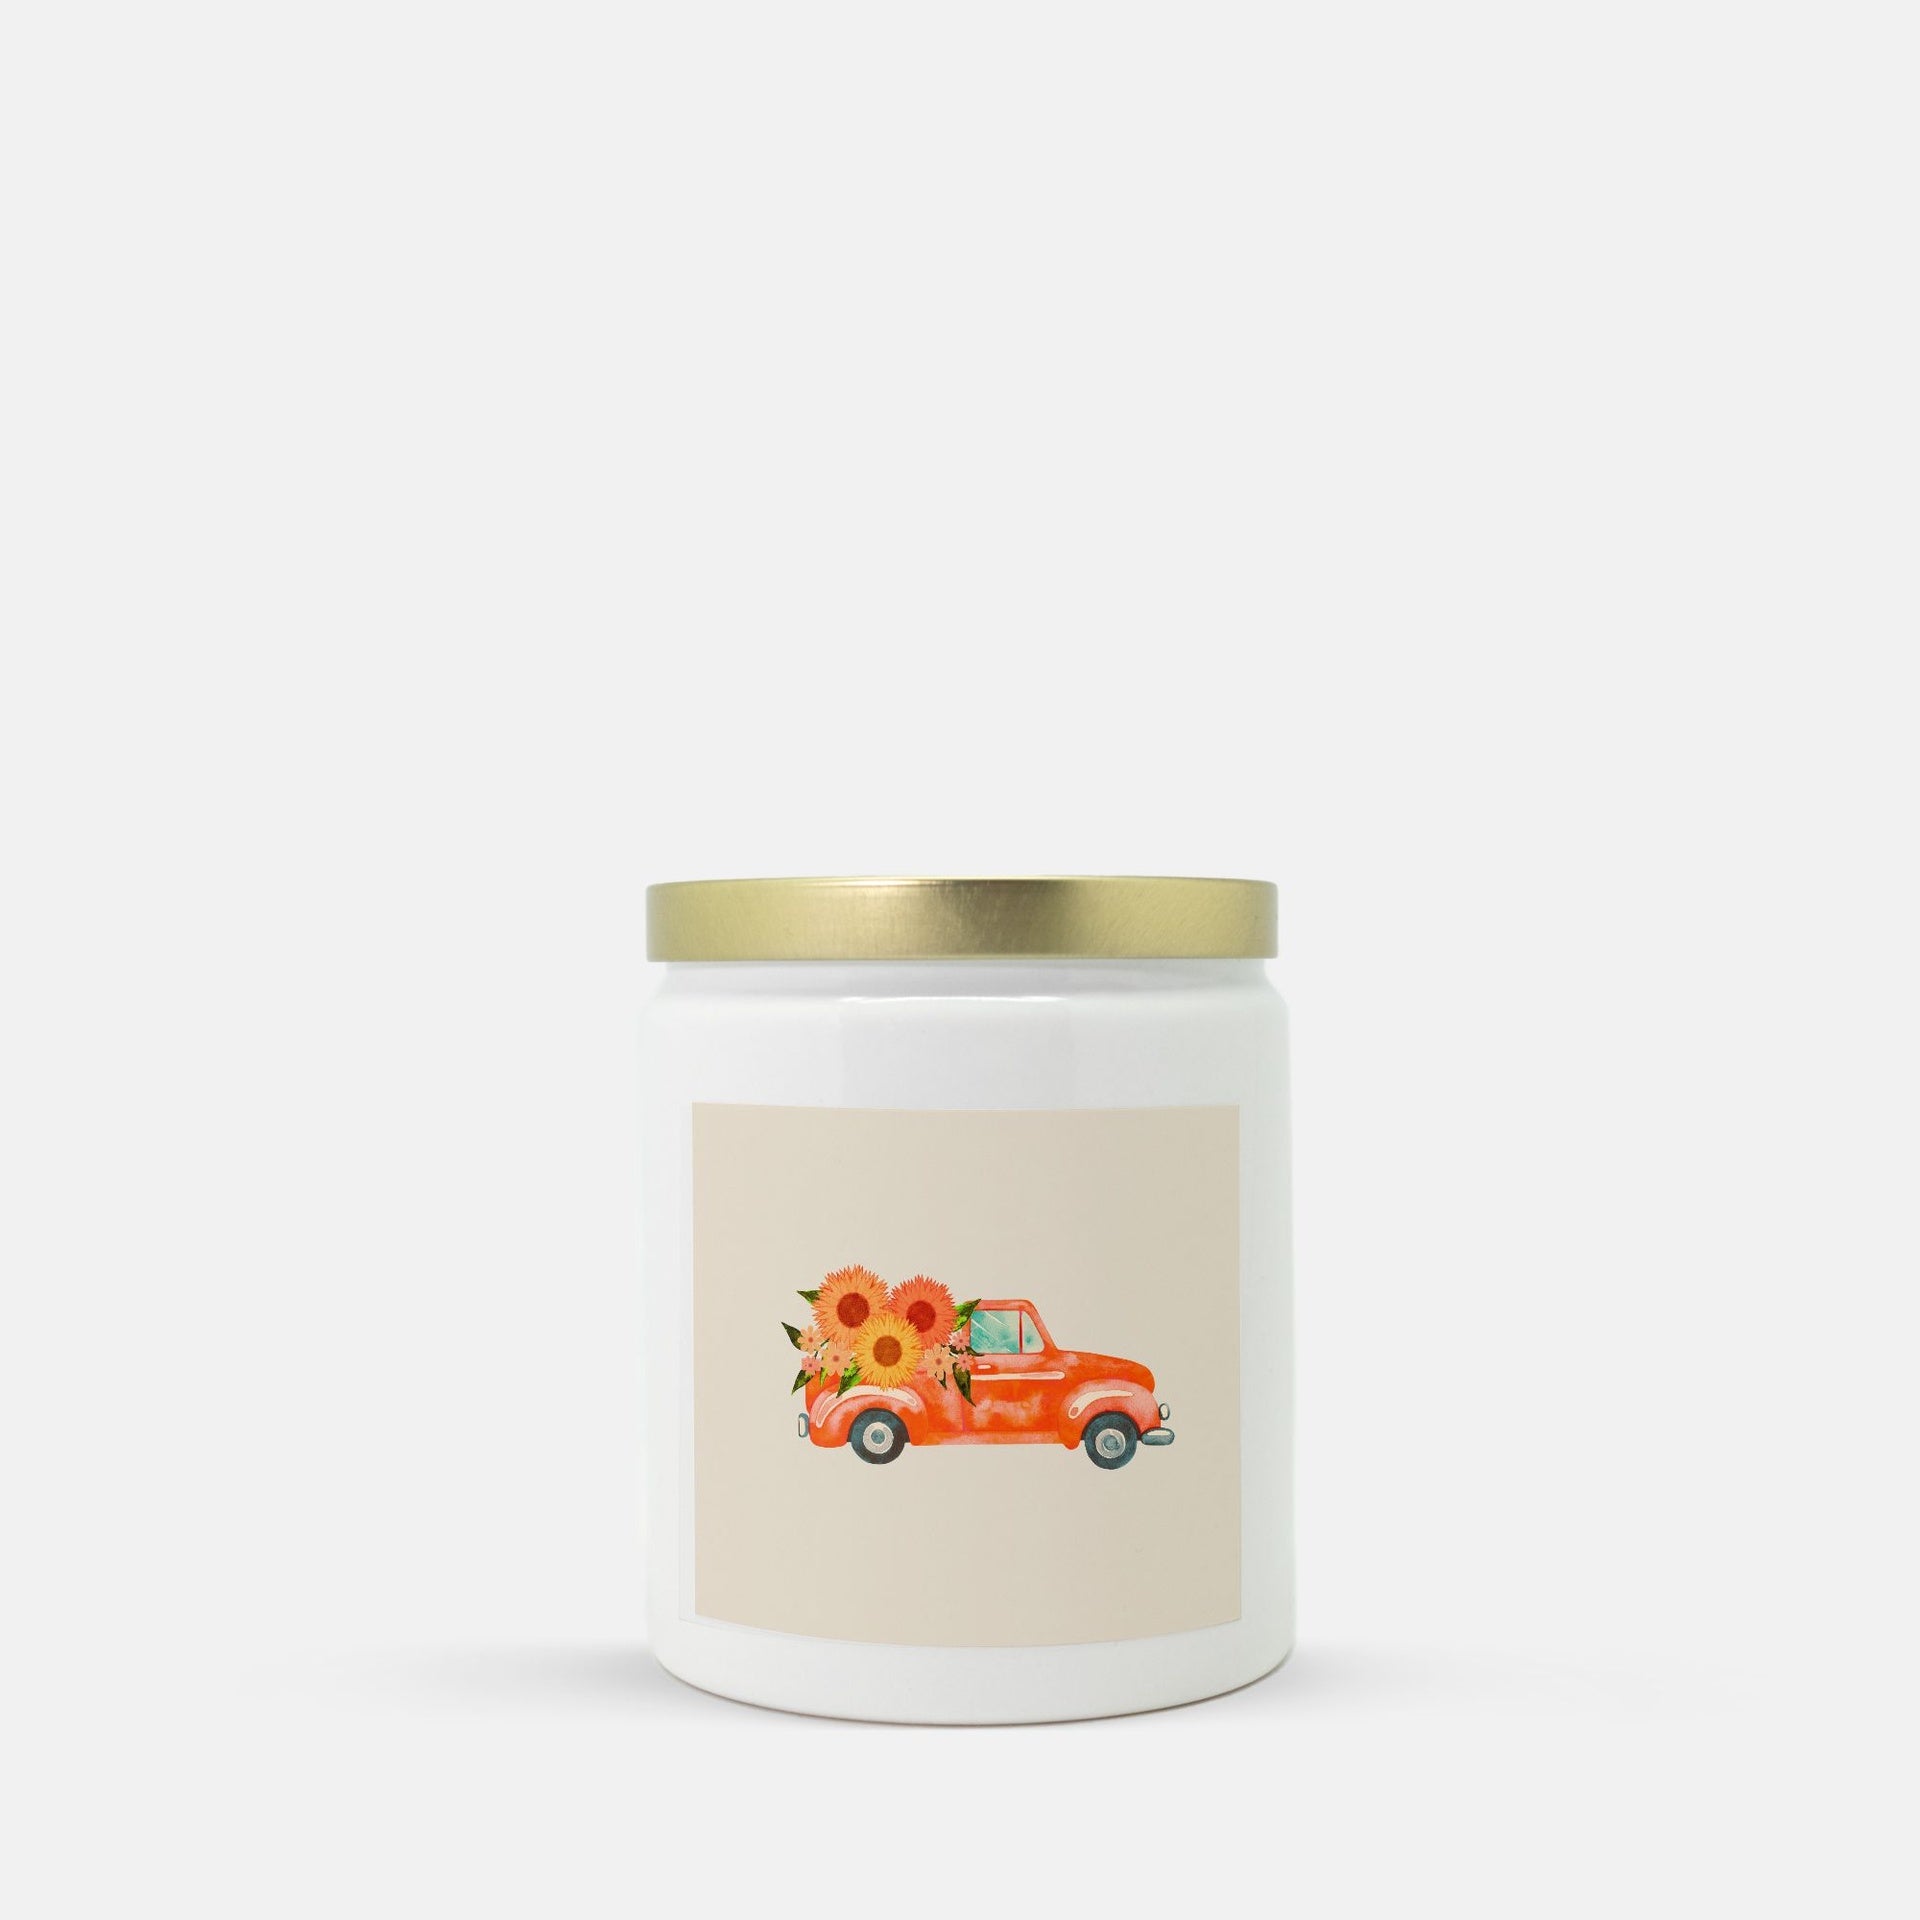 Lifestyle Details - Bright Orange Rustic Truck Ceramic Candle w Gold Lid - Macintosh